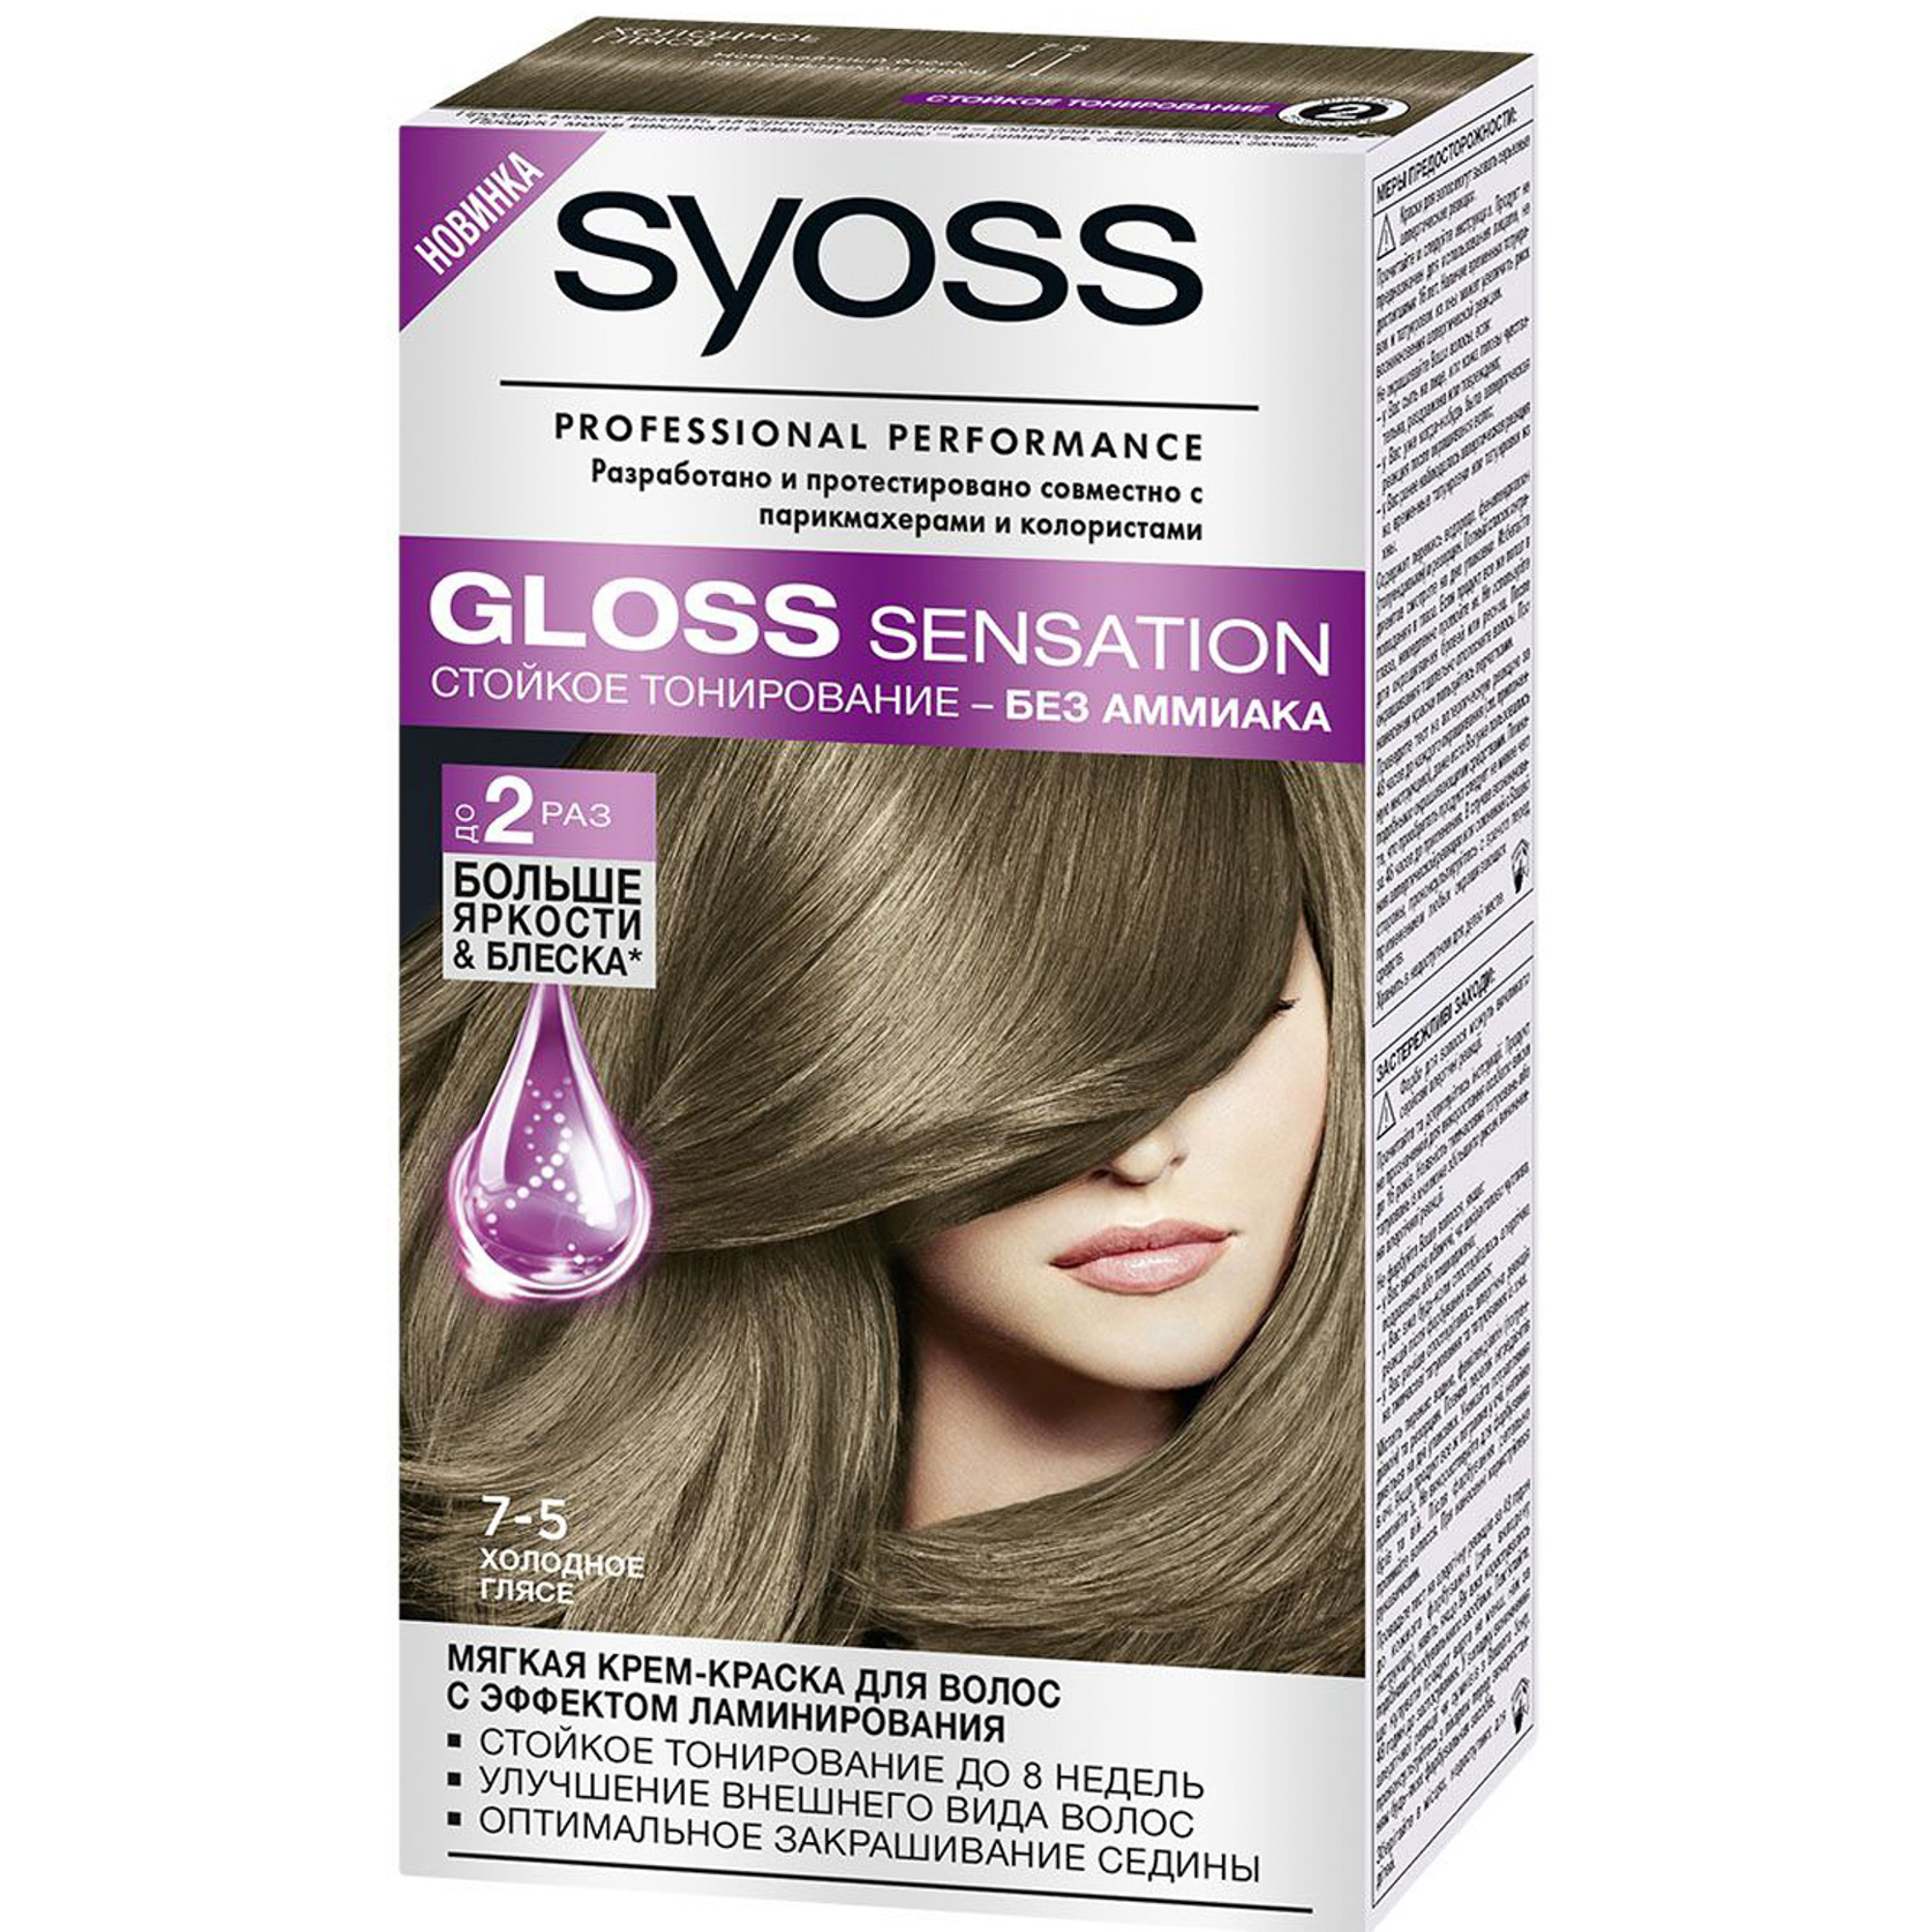 Лучшая пепельная краска. Syoss Gloss Sensation. Syoss Gloss Sensation 7-5 Холодное глясе. Syoss Gloss Sensation мягкая крем-краска для палитра. Syoss Gloss Sensation 5.86 палитра.